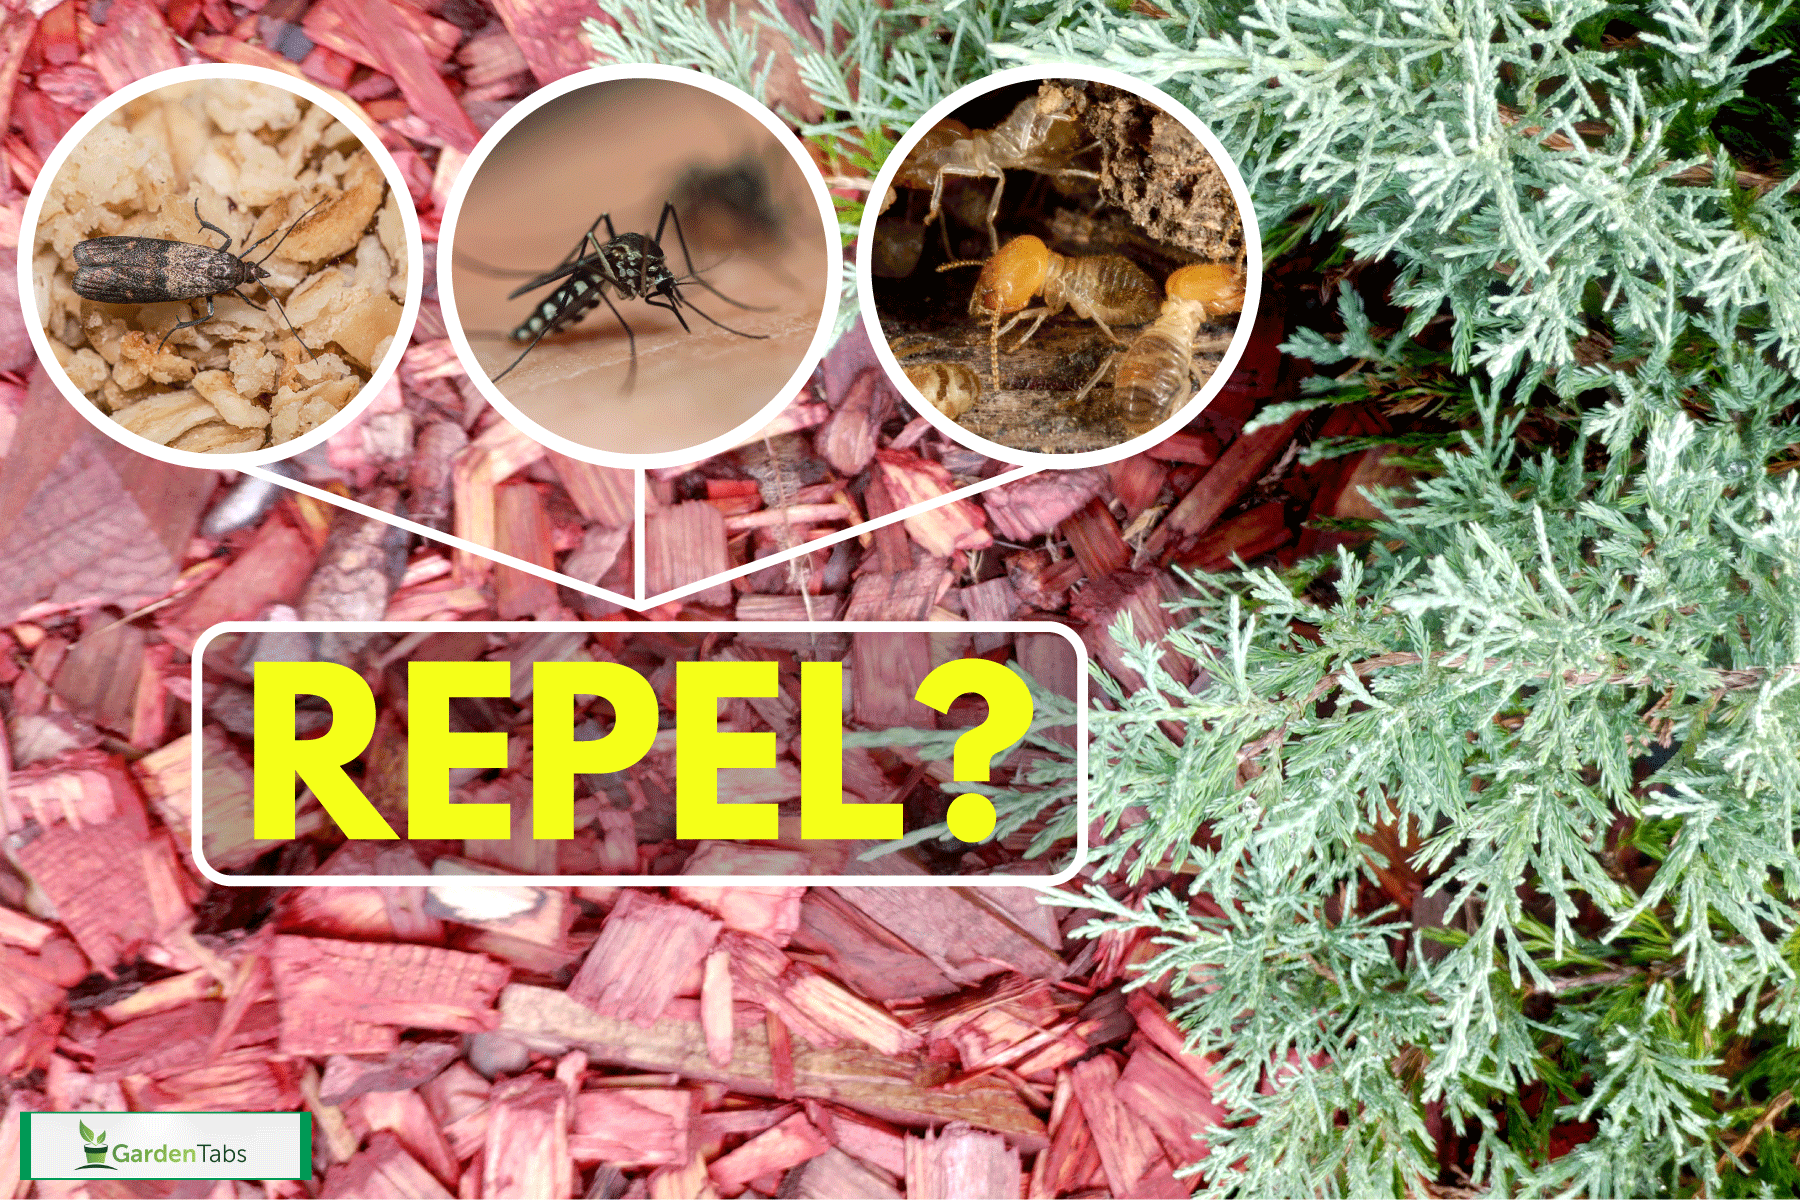 Red Cedar mulch used as fertilizer, Does Cedar Mulch Repel Bugs? How Effective Is It?